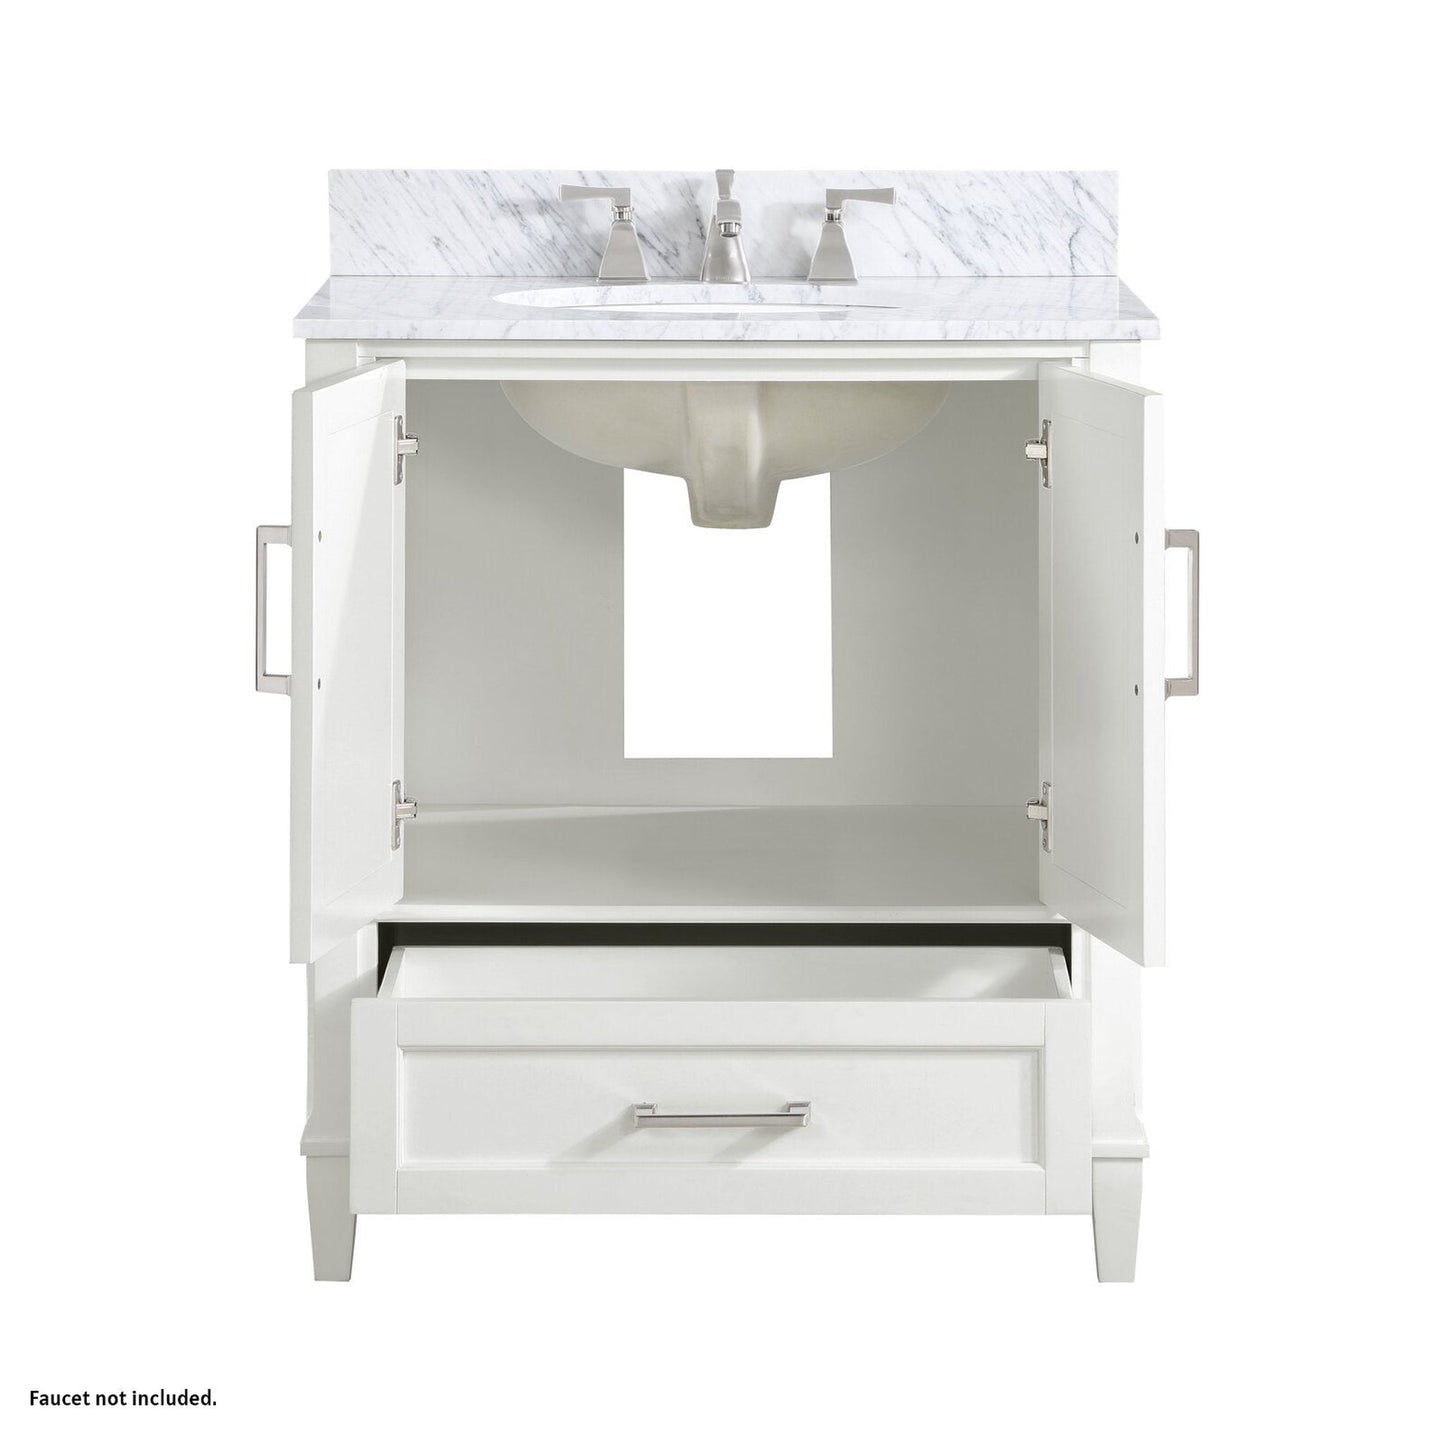 Bemma Design Montauk 30" Pure White Solid Wood Freestanding Bathroom Vanity With Single 3-Hole Italian Carra Marble Vanity Top, Oval Undermount Sink, and Backsplash